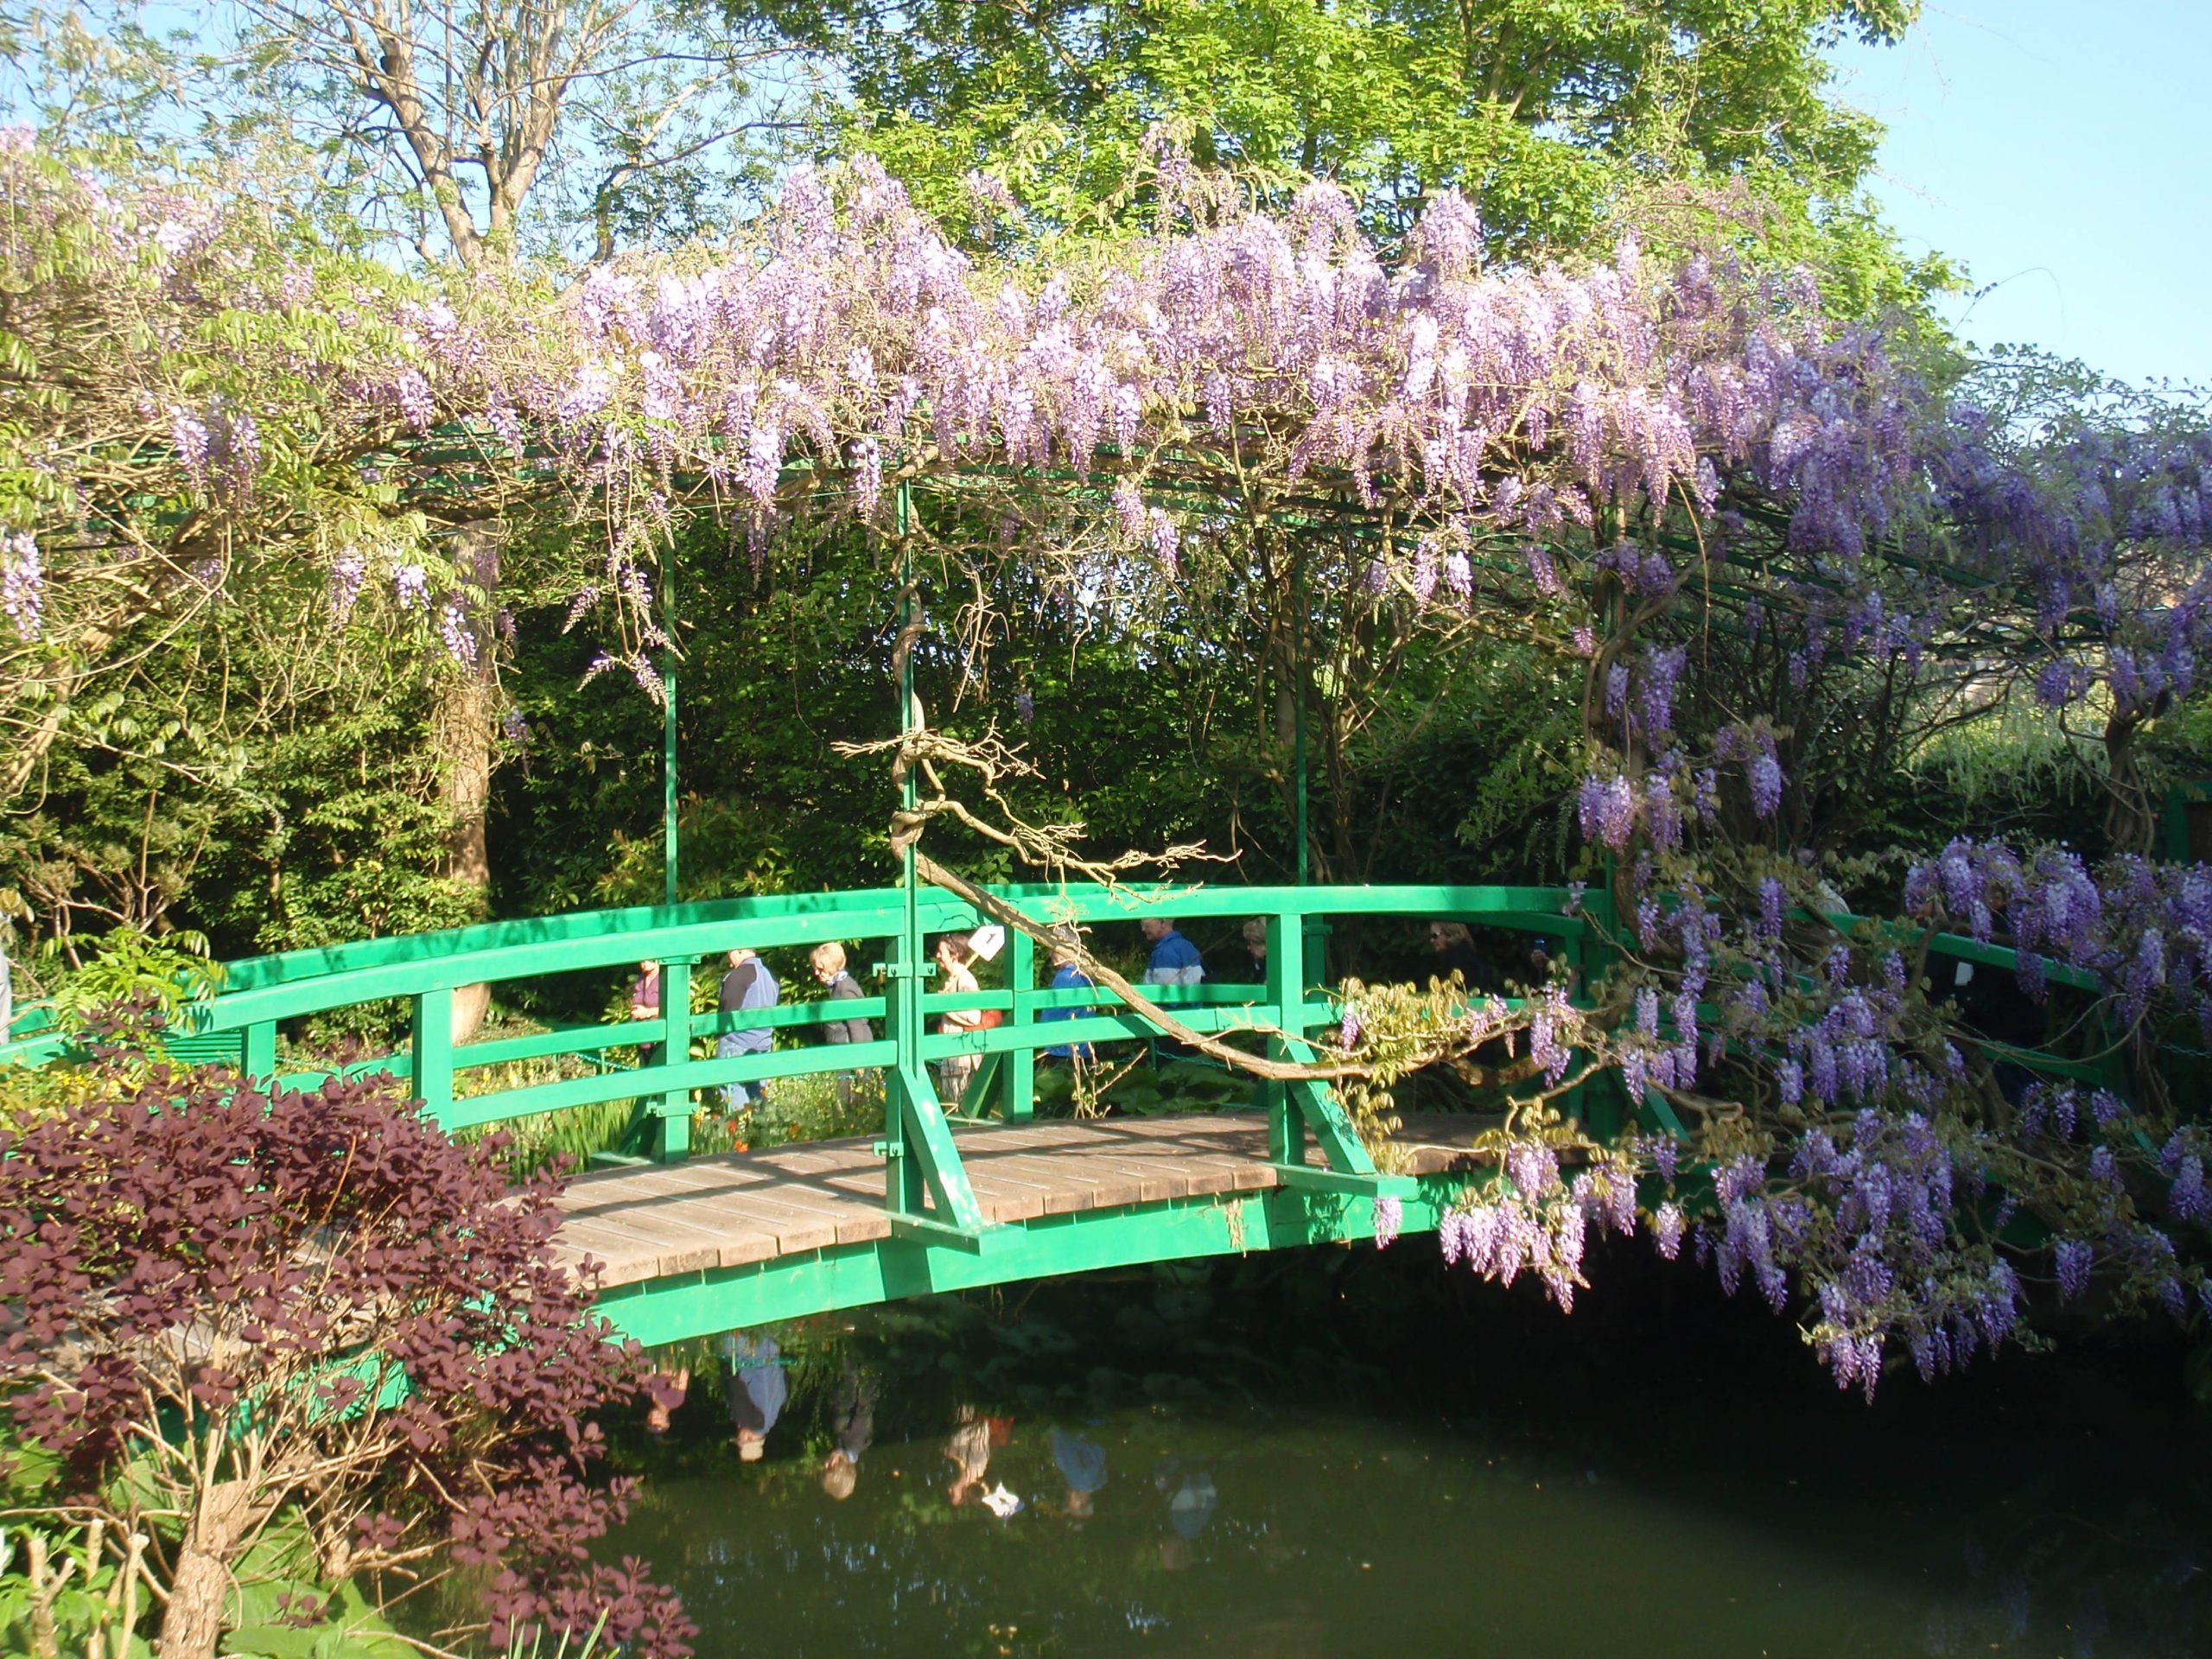 Monet's Gardens